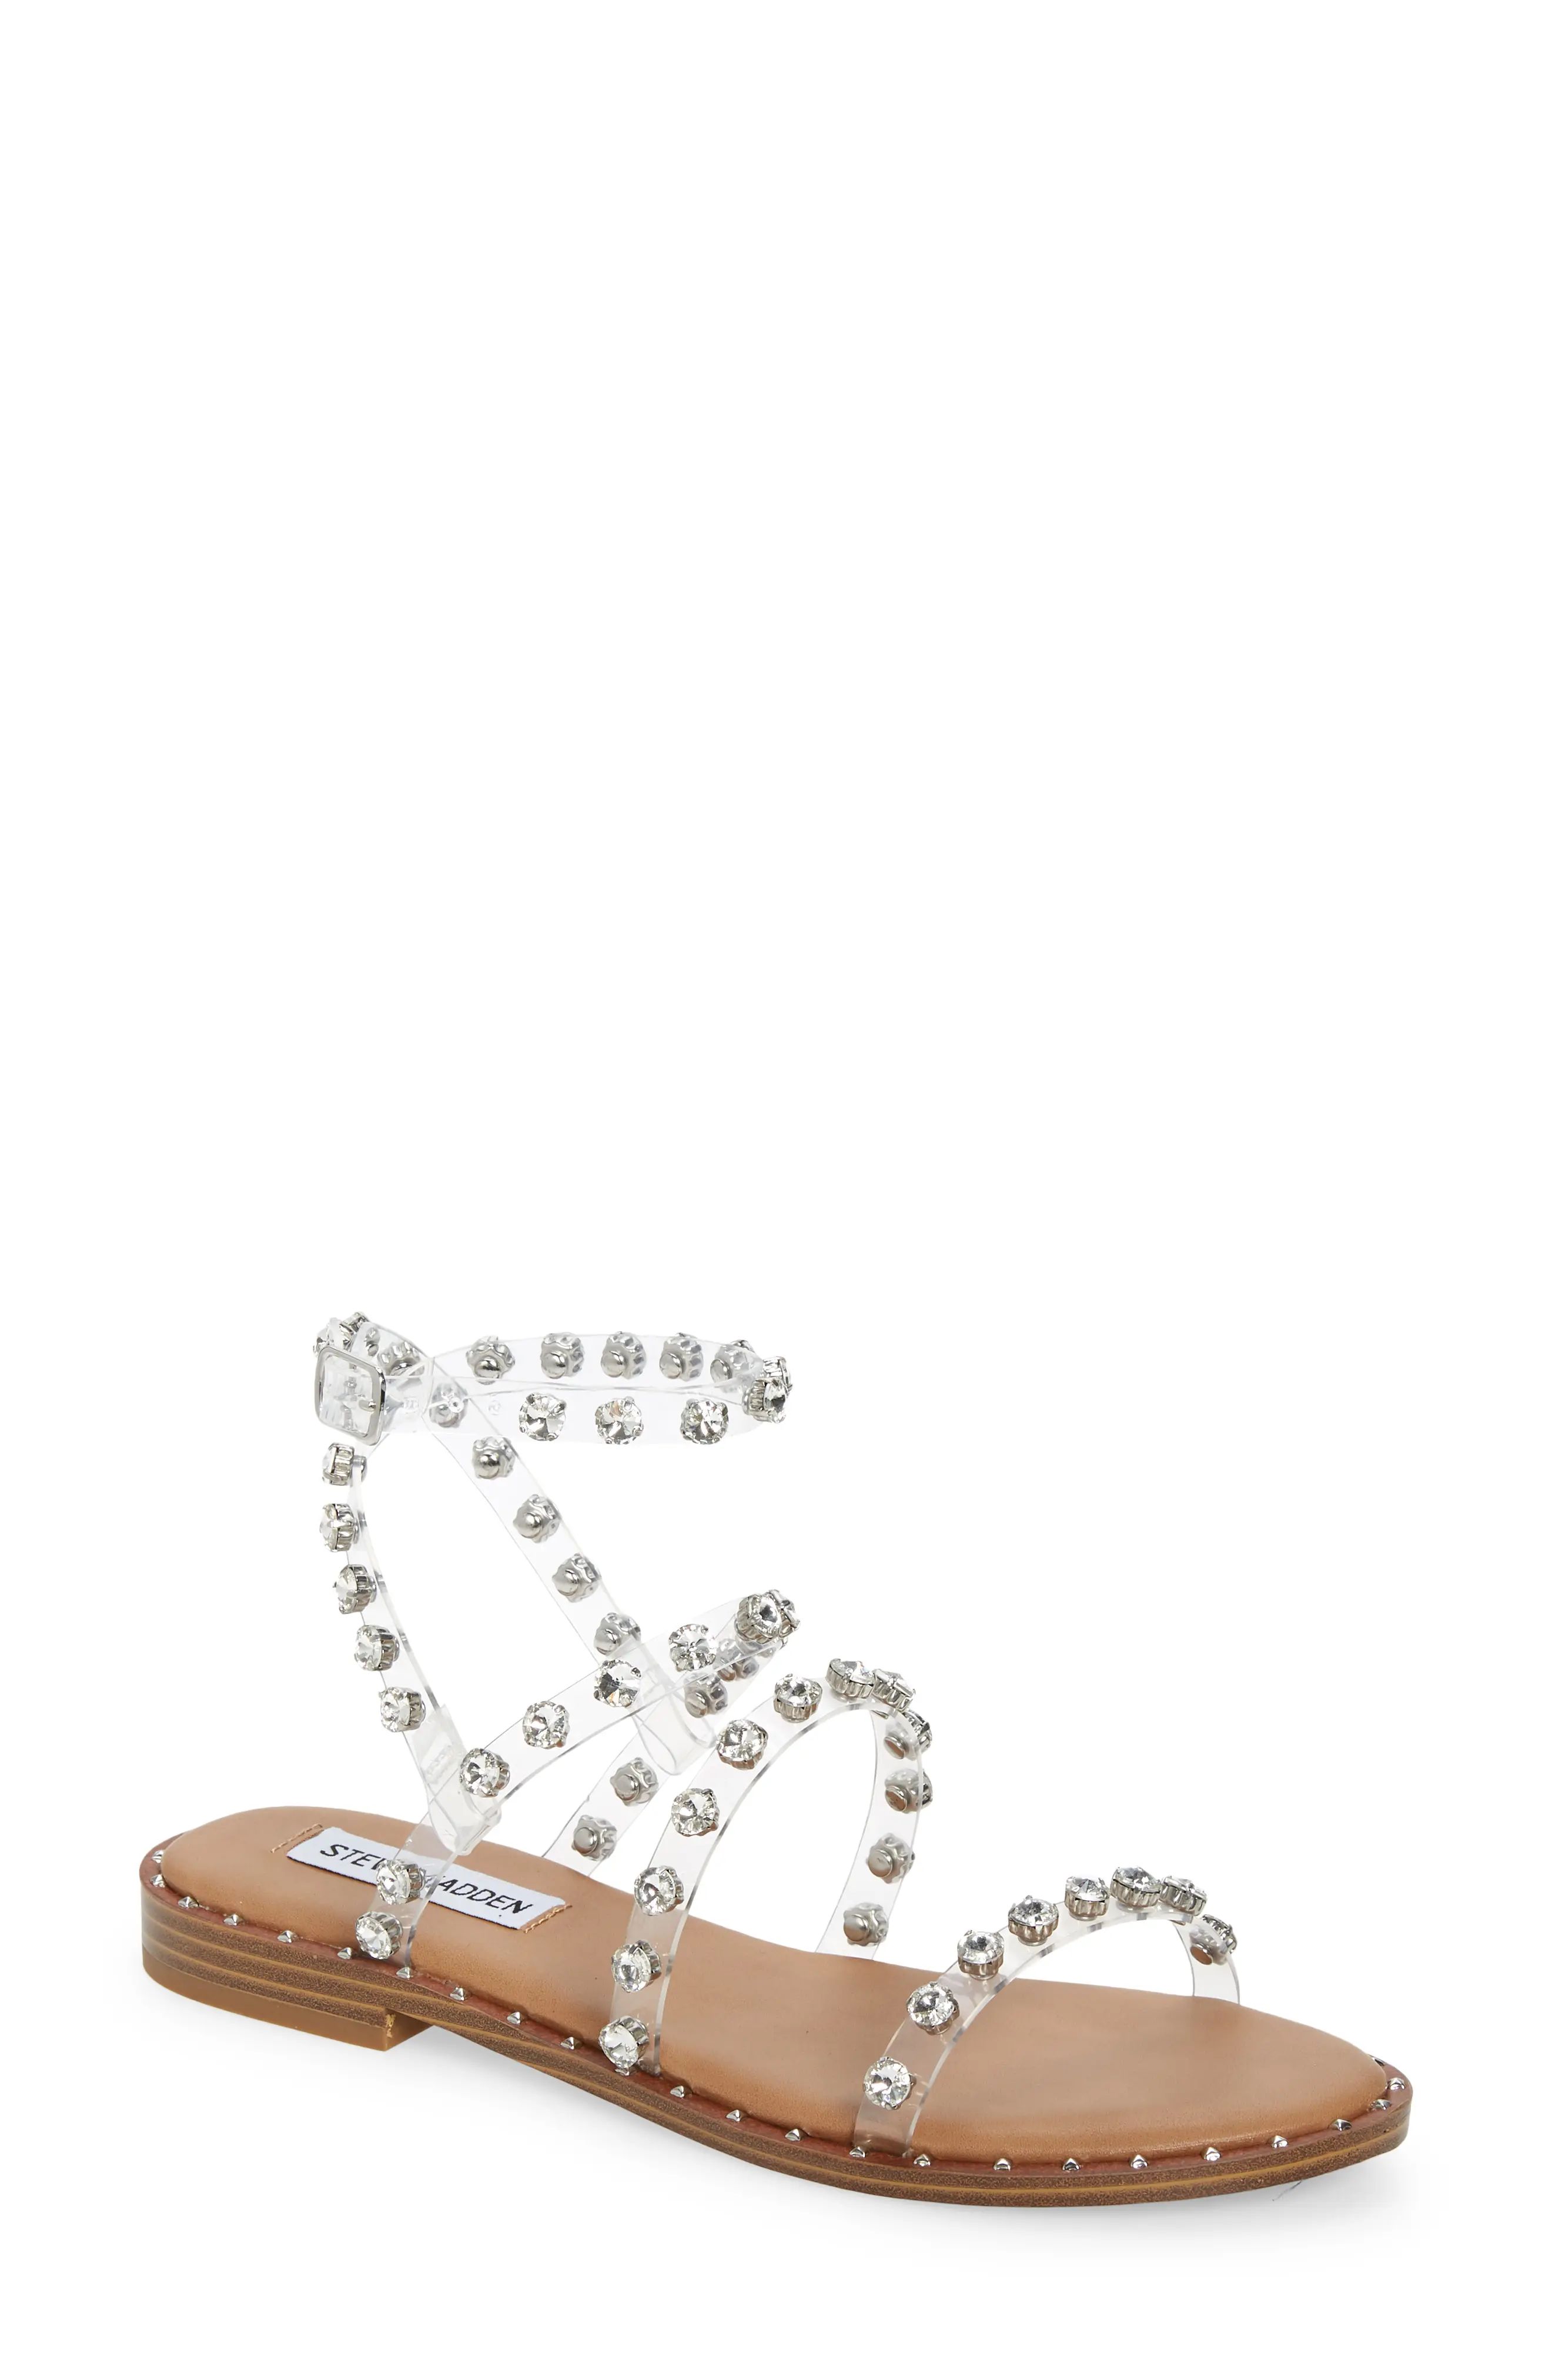 Women's Steve Madden Travel Crystal Studded Strappy Sandal, Size 9.5 M - Brown | Nordstrom